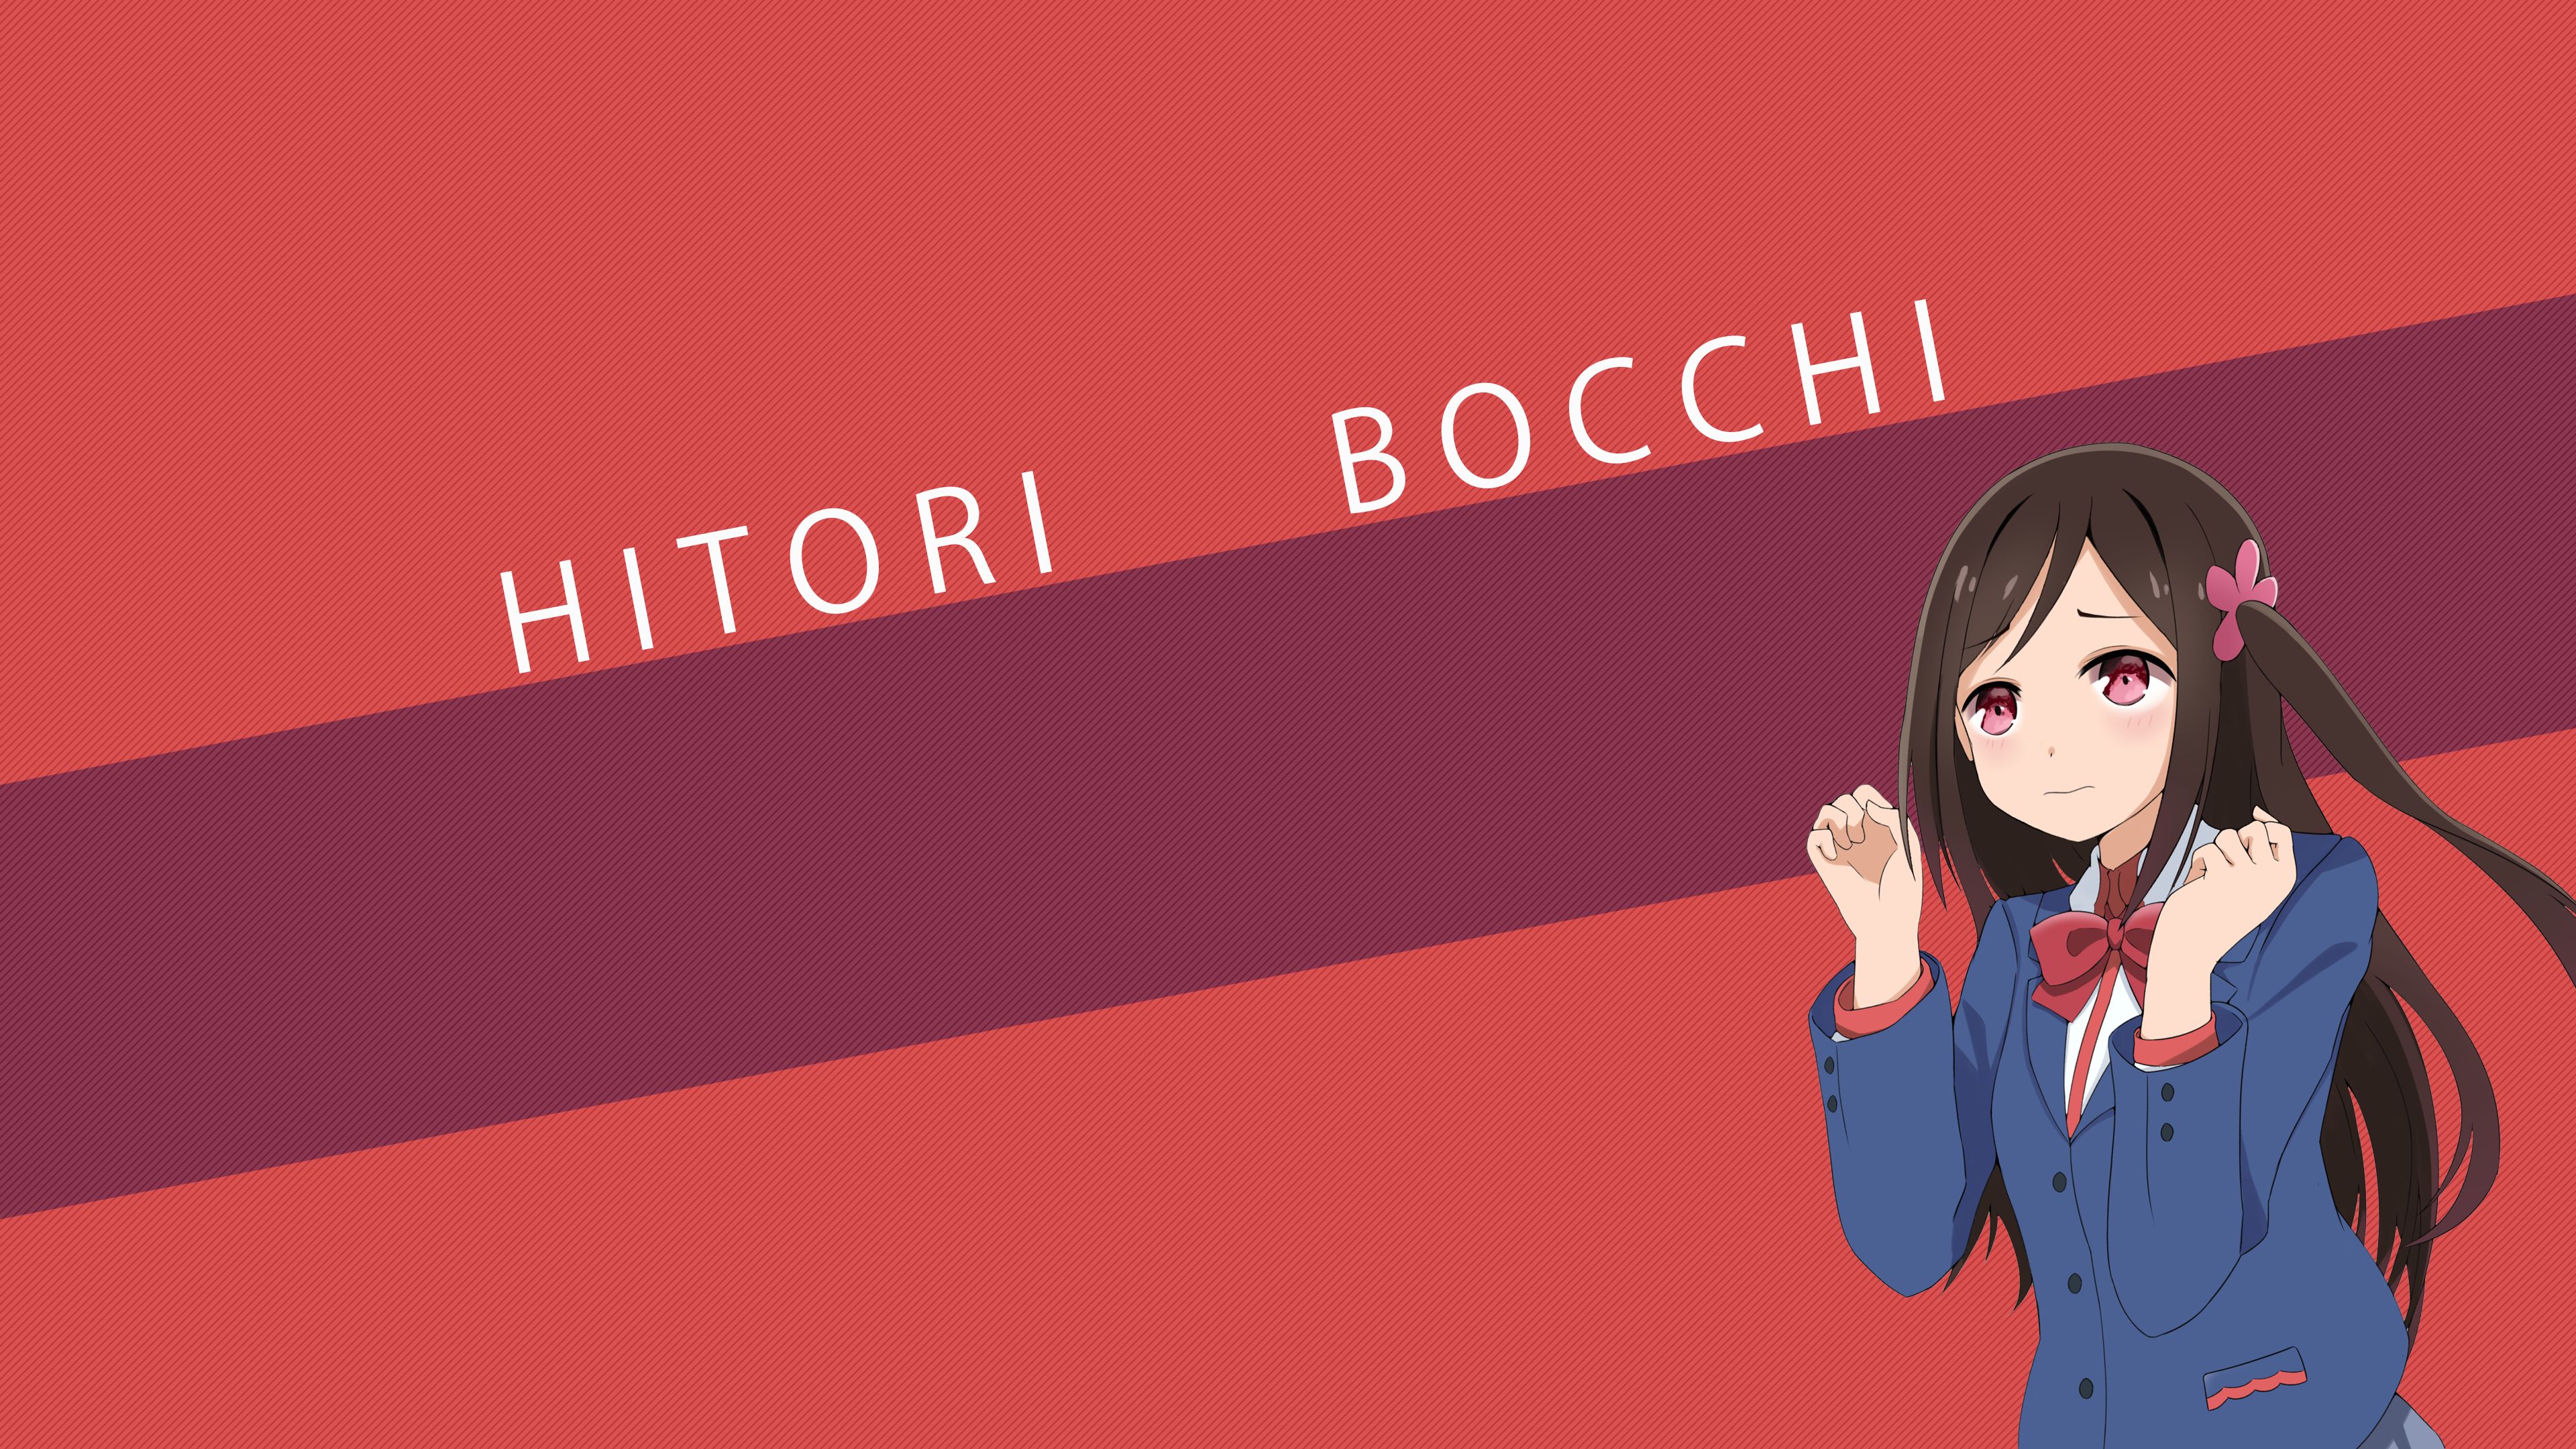 Hitori bocchi wallpaper by NakoPosting - Download on ZEDGE™